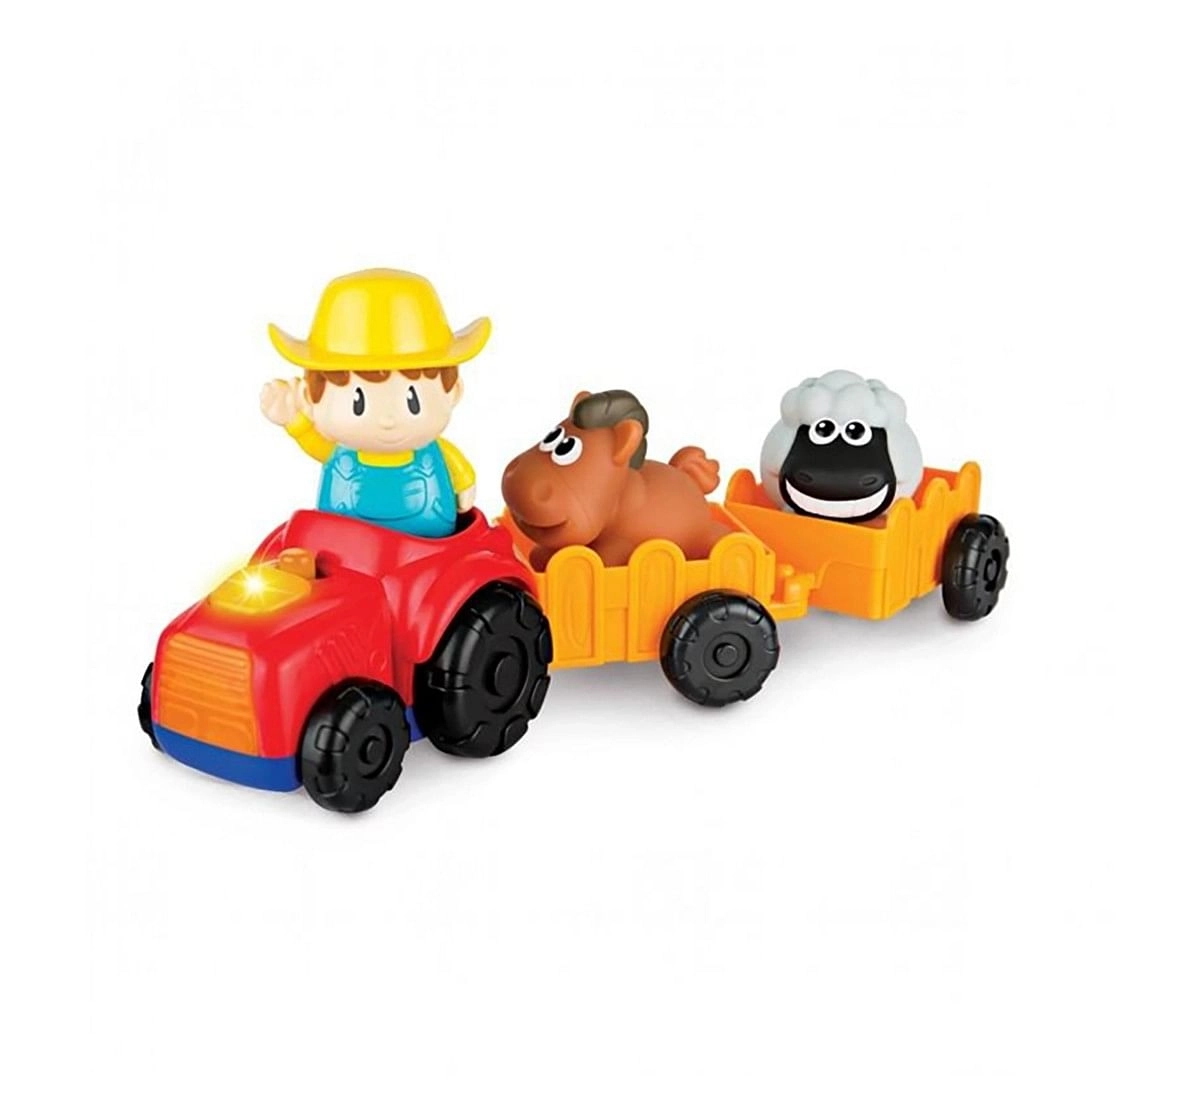  Winfun - Farmer Friend Tractor Fun Learning Toys for Kids age 18M + 